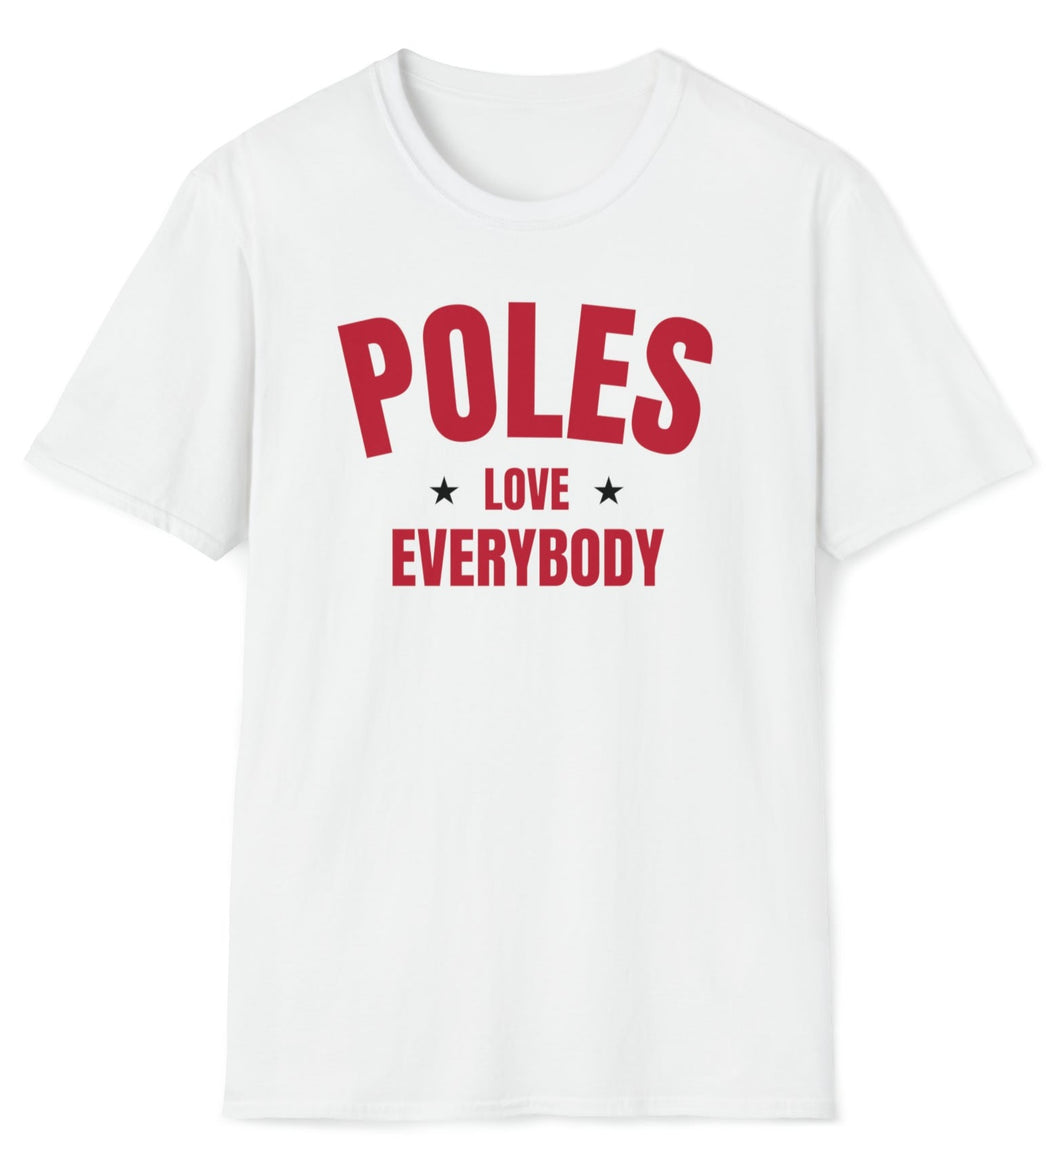 SS T-Shirt, POL Poles - Red